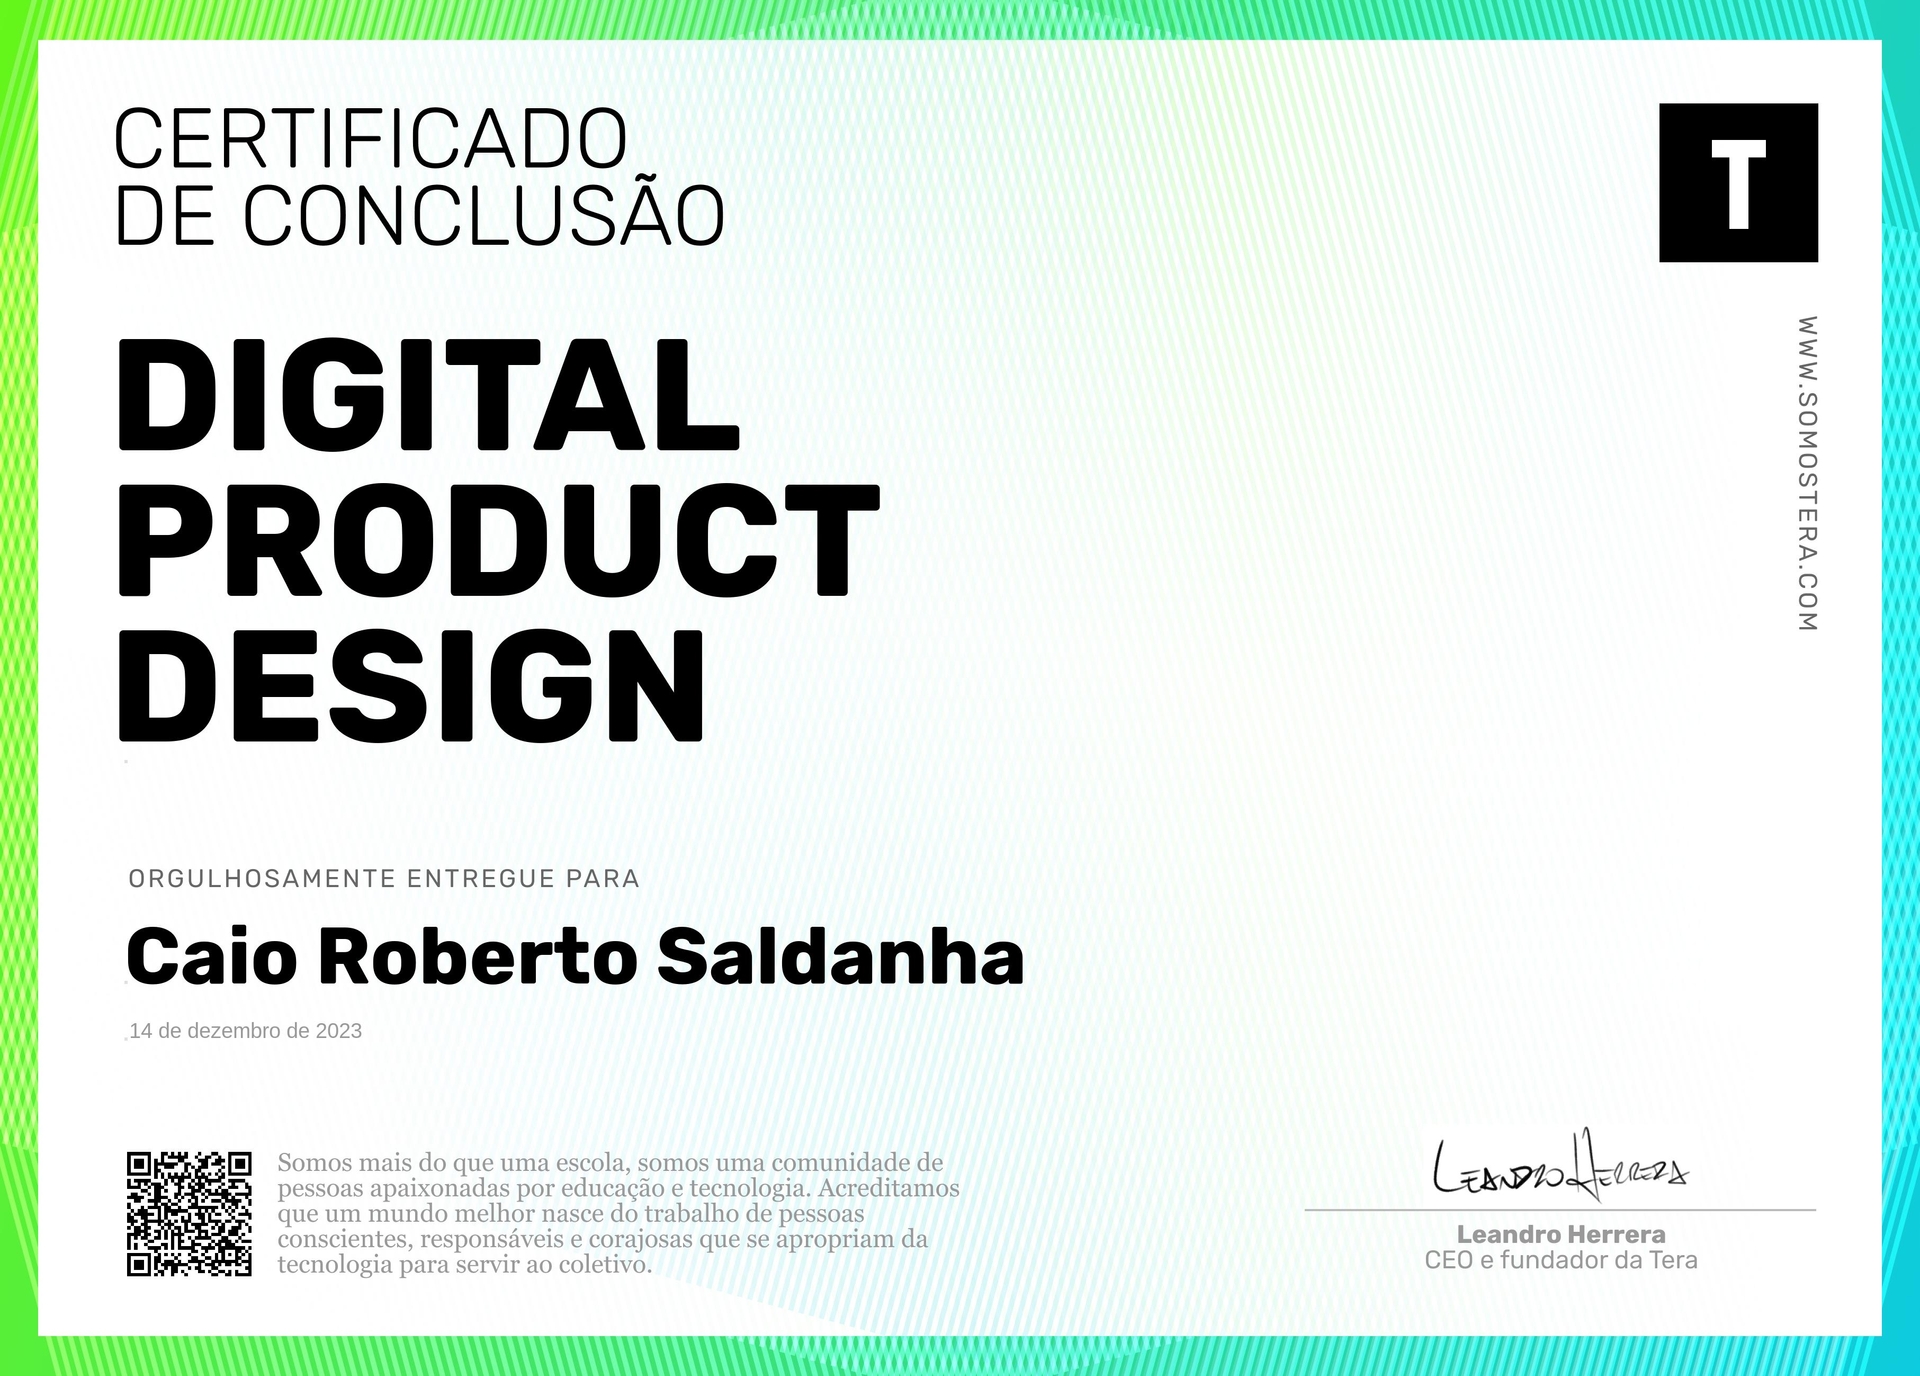 Certificado de Caio Roberto Saldanha